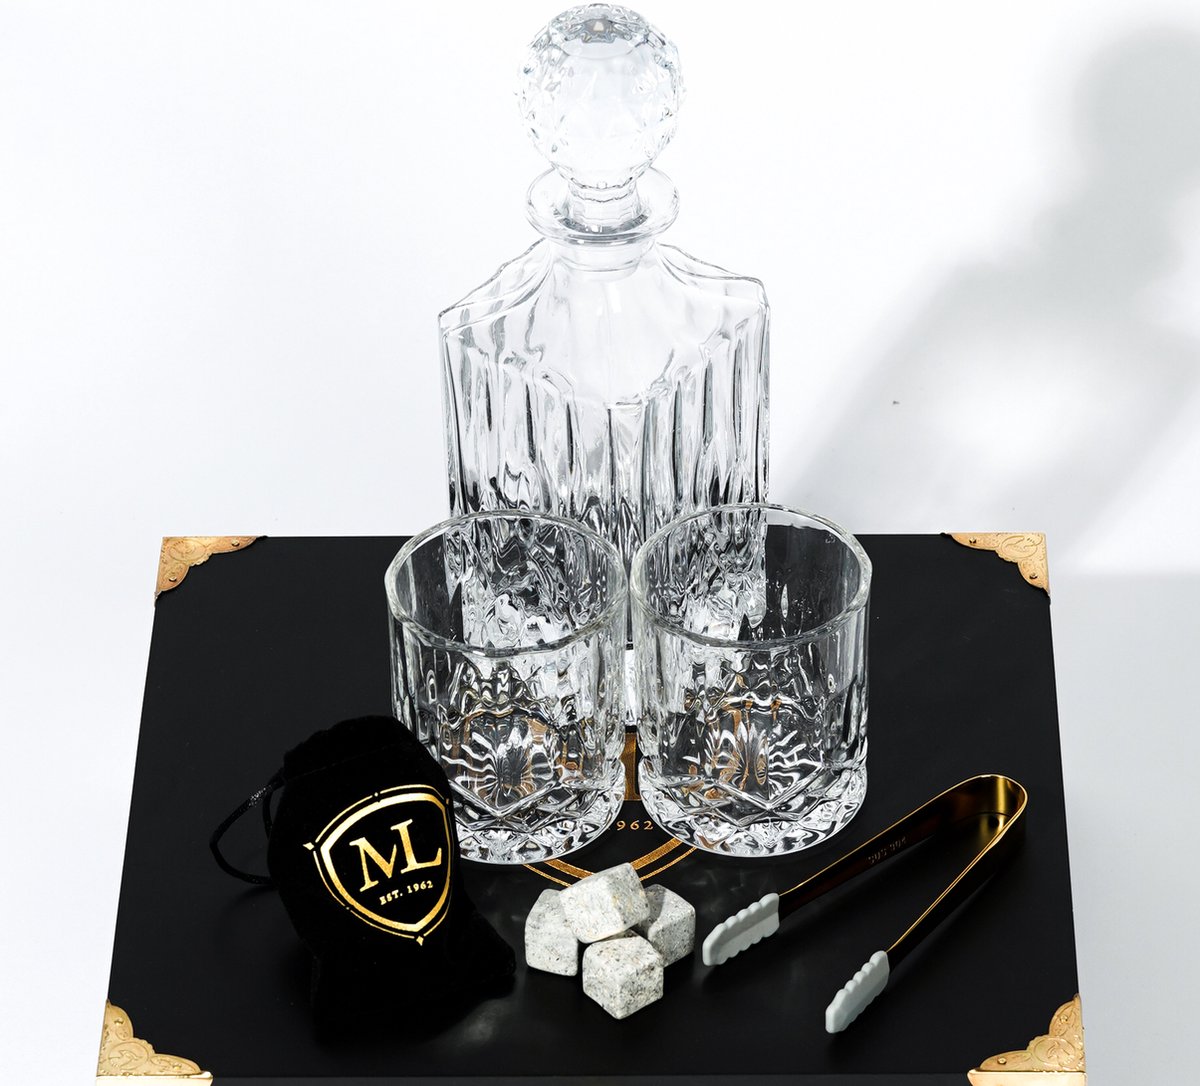 Meadow Lane - Whiskey Karaf - Luxe Whiskey Set met 2 Glazen en Karaf - 8 Stones en IJstang - Mancave Decoratie